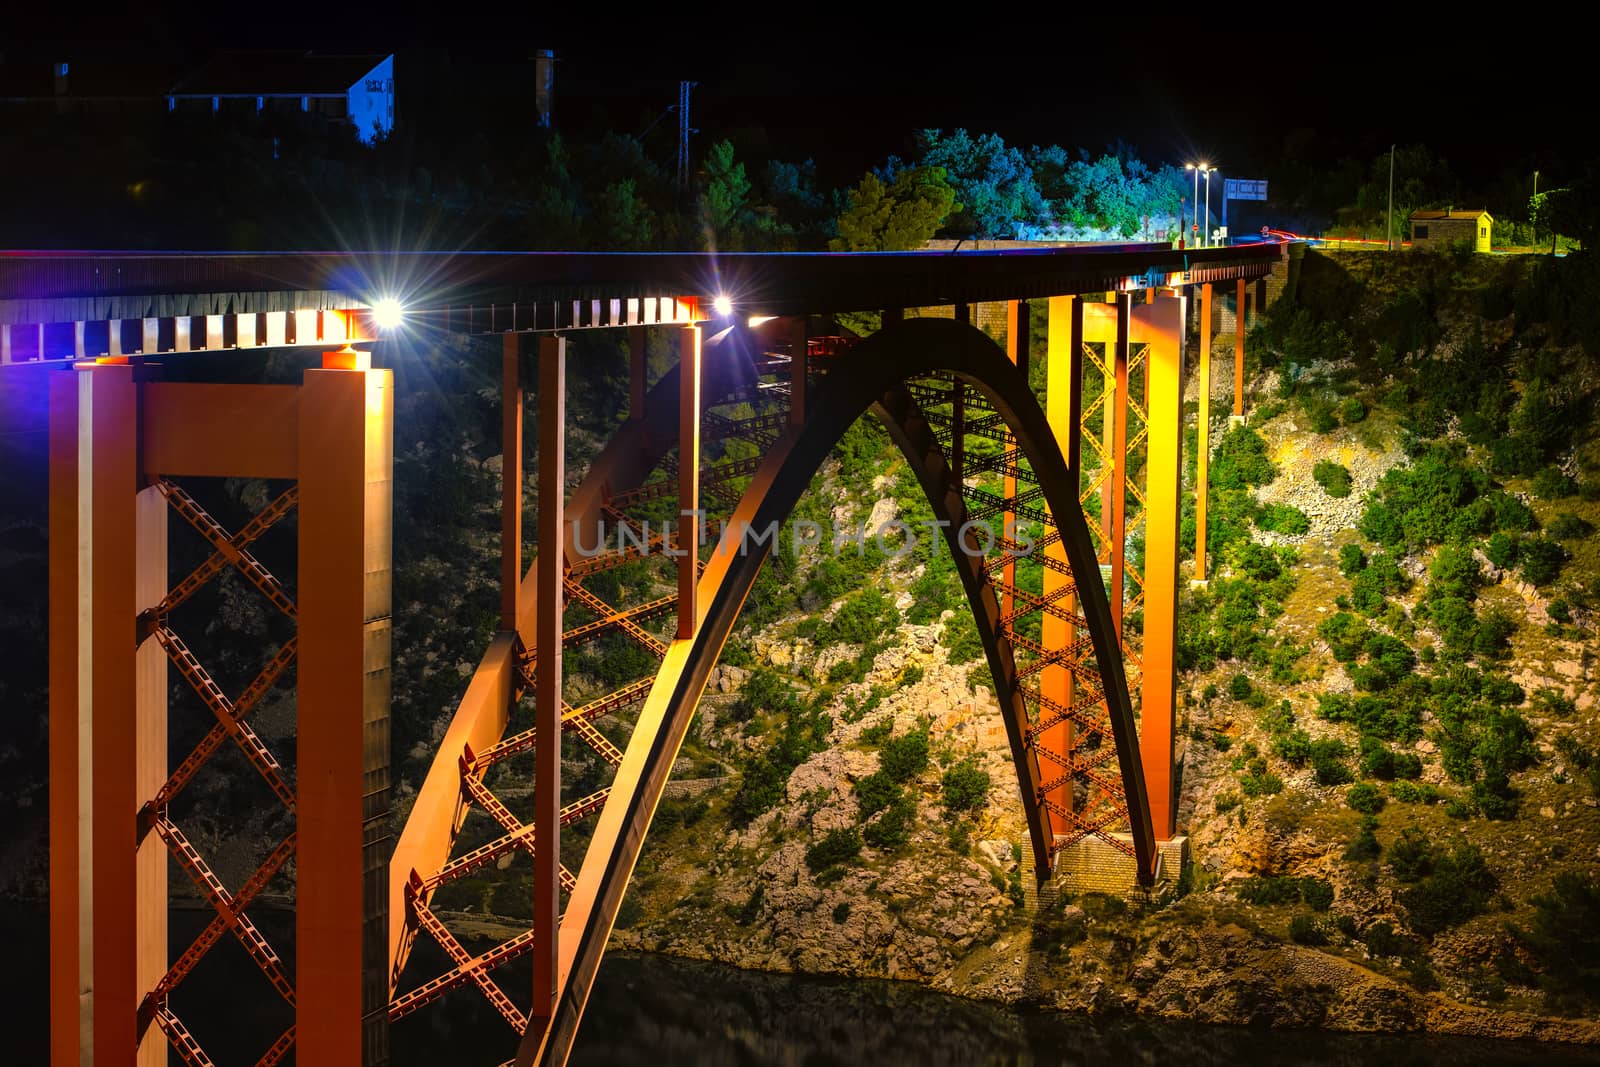 Illuminated bridge at night, steel arch construction by asafaric